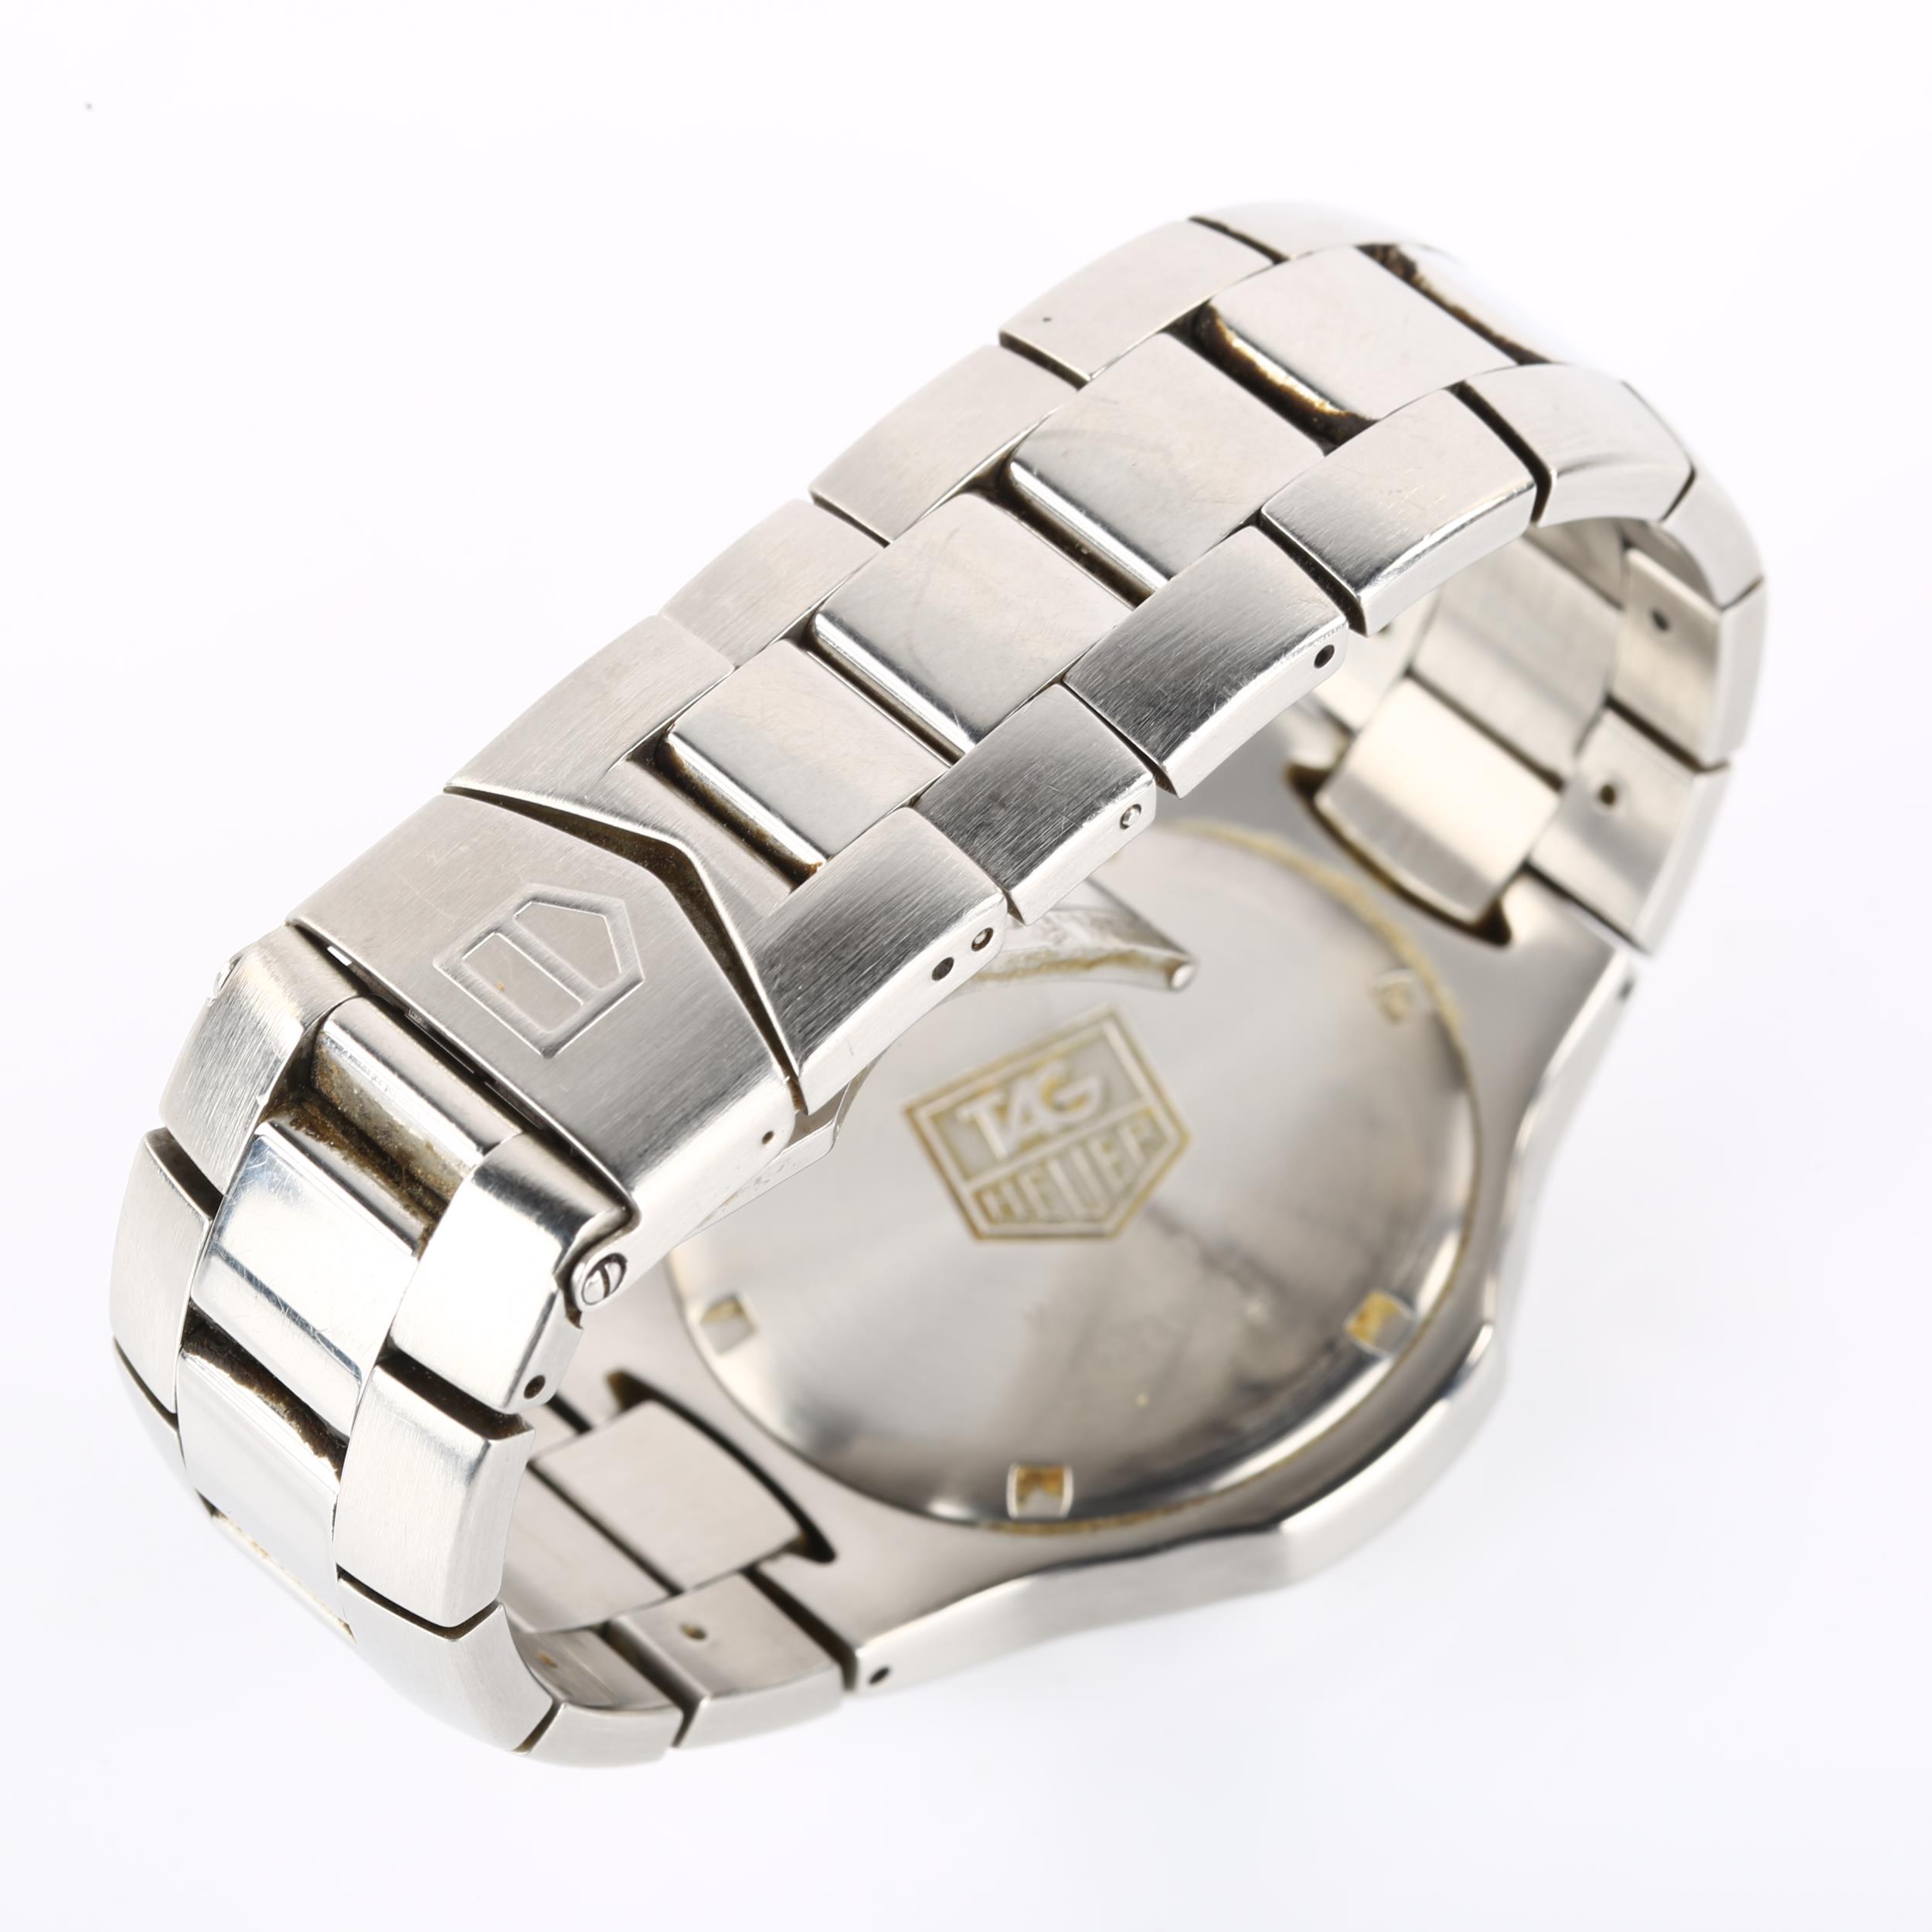 TAG HEUER - a stainless steel Kirium Professional 200M quartz bracelet watch, ref. WL1113-0, circa - Image 3 of 4